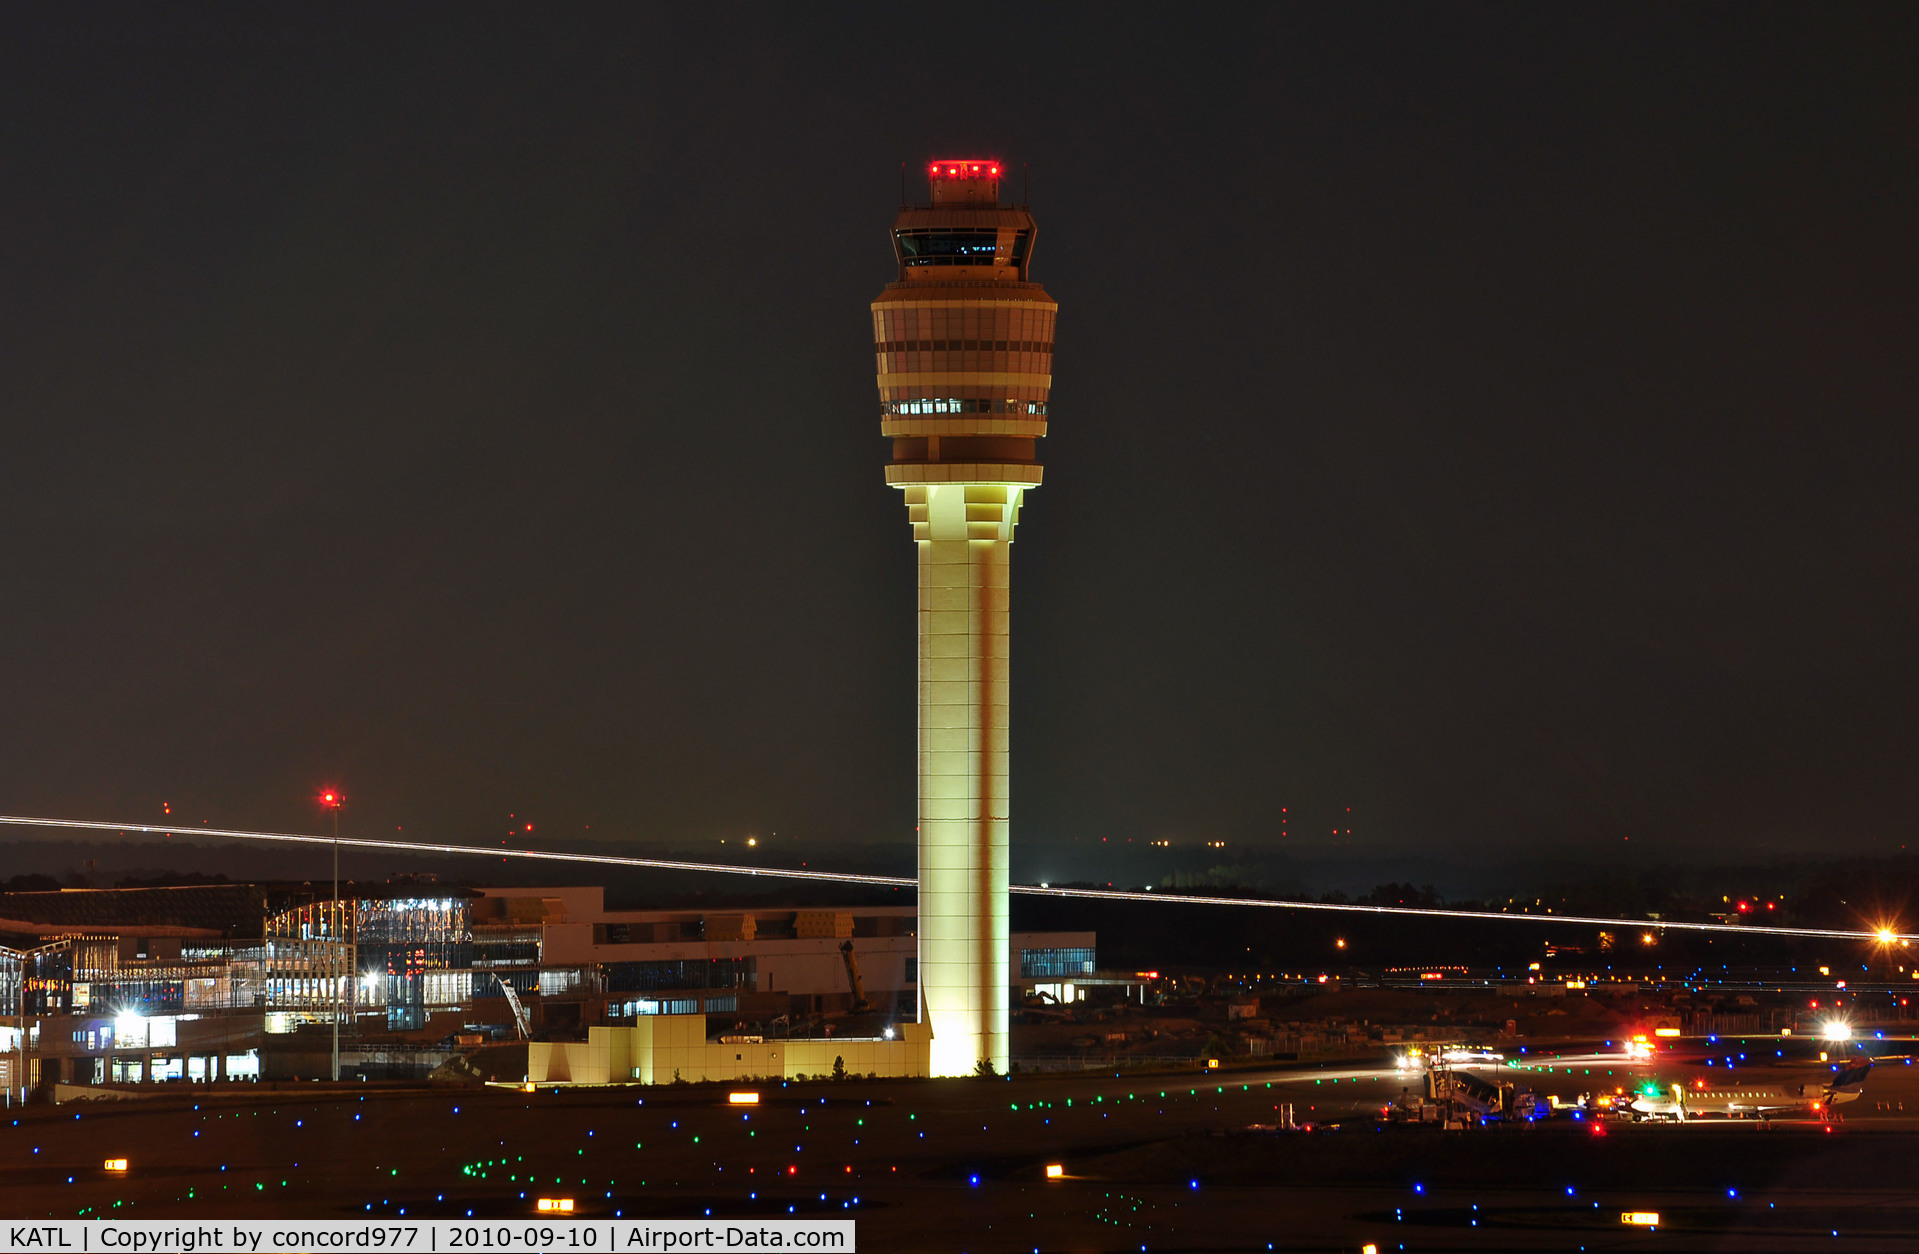 Hartsfield - Jackson Atlanta International Airport (ATL) - New tower at KATL, adjacent to the new International Terminal.